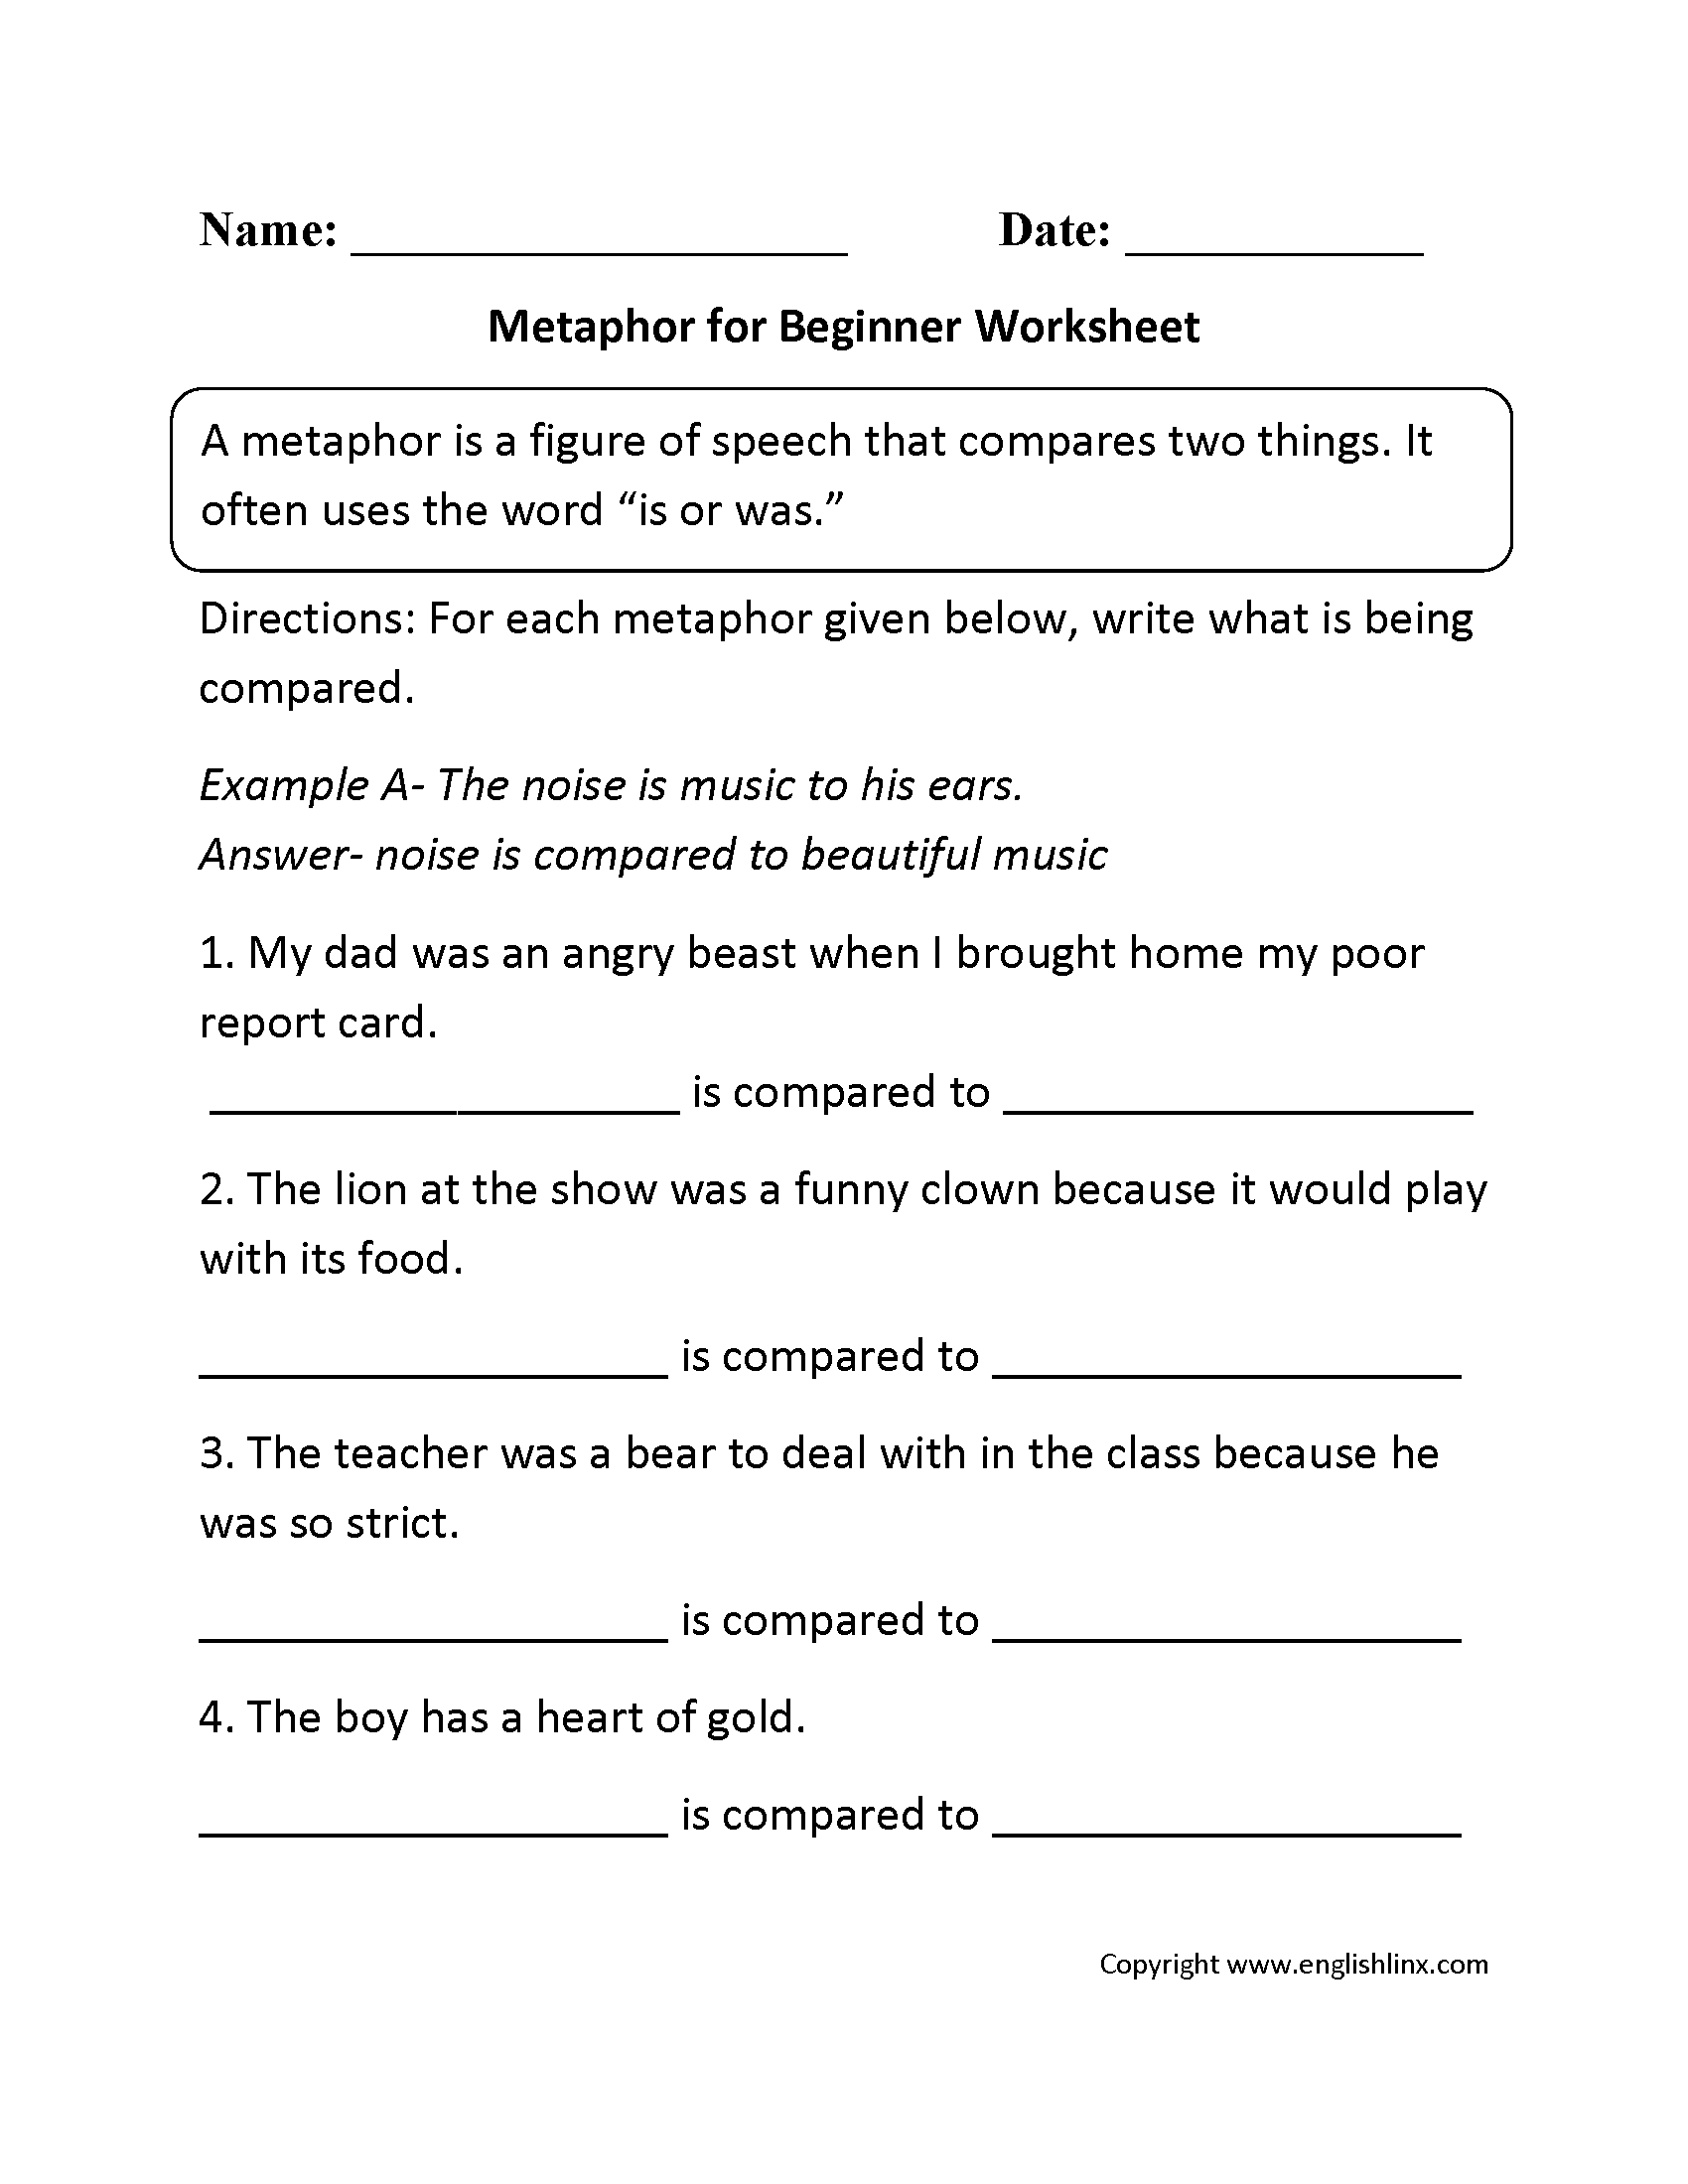 Metaphor for Beginner Worksheets